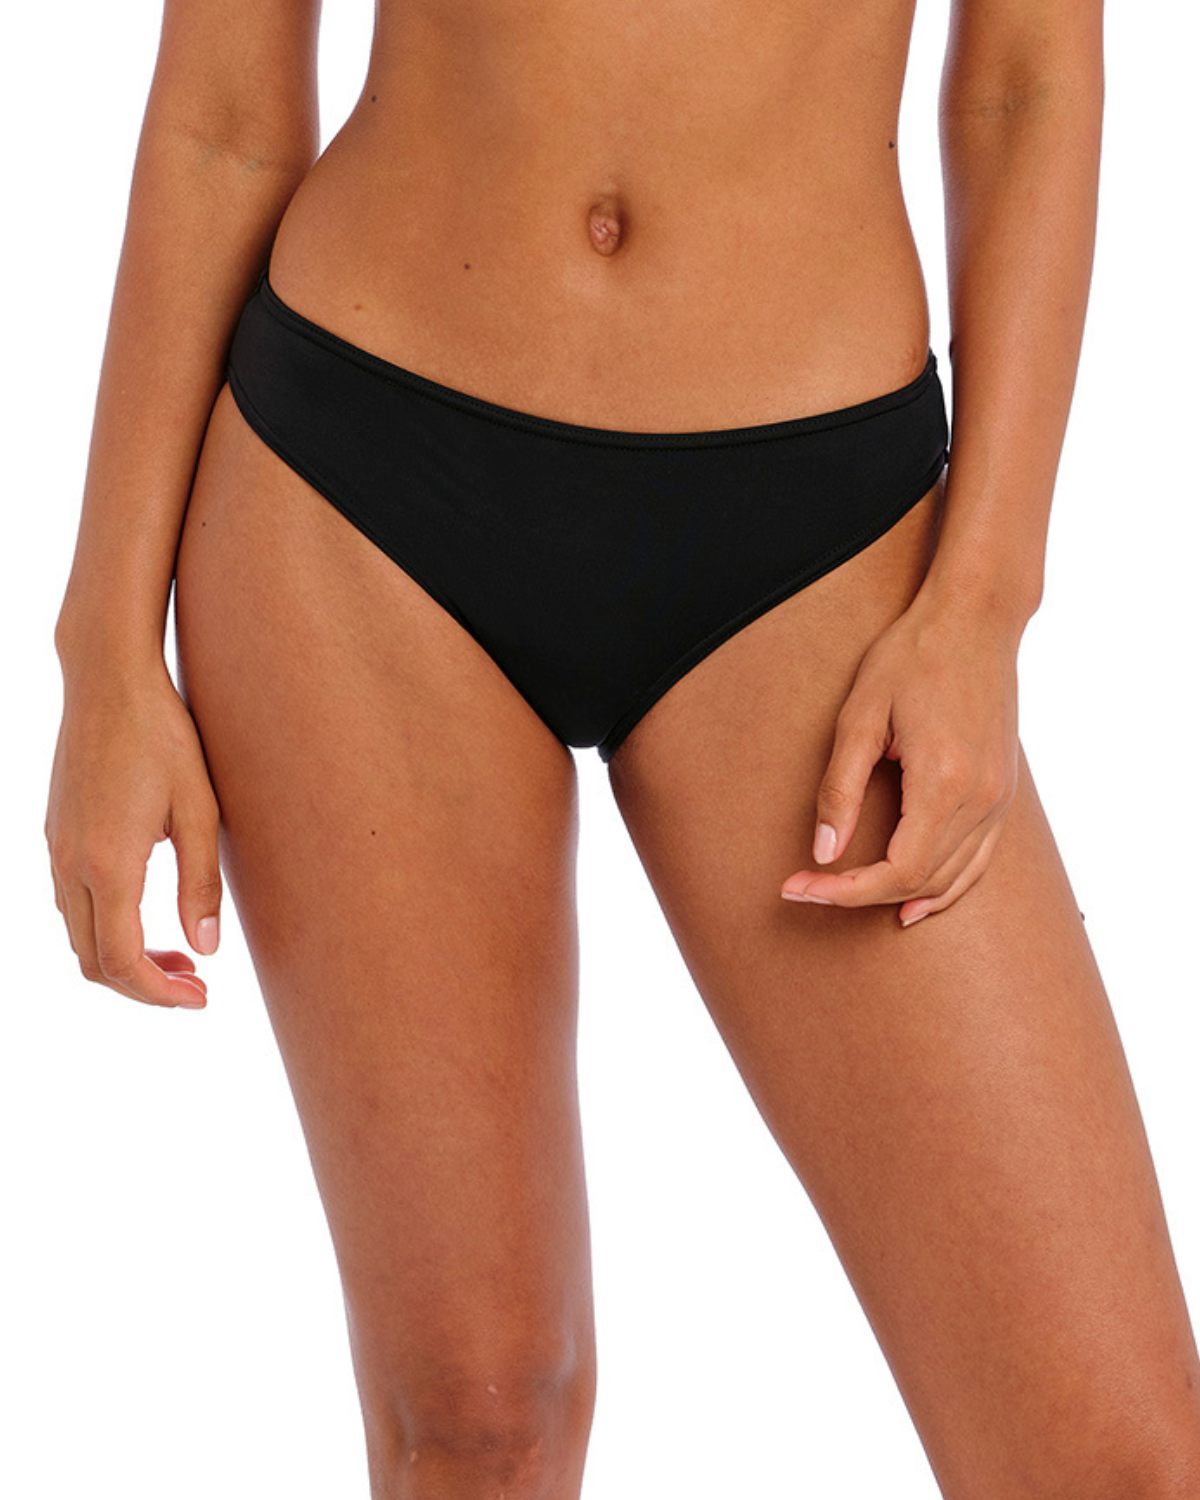 Model wearing a bikini brief bottom in black